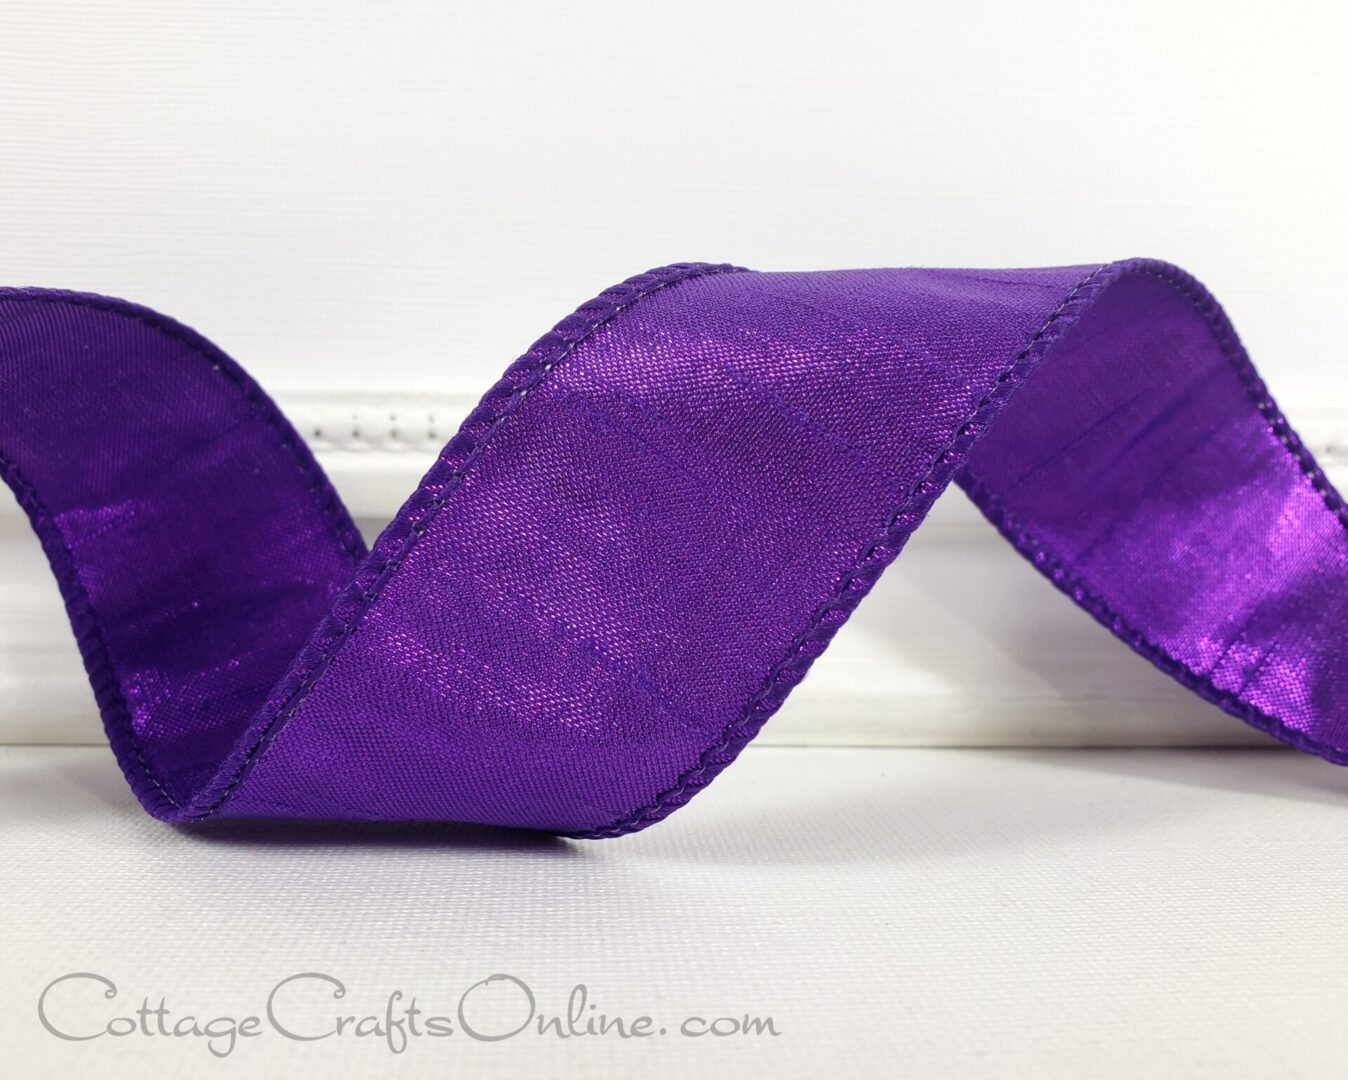 a purple satin ribbon on a white surface.